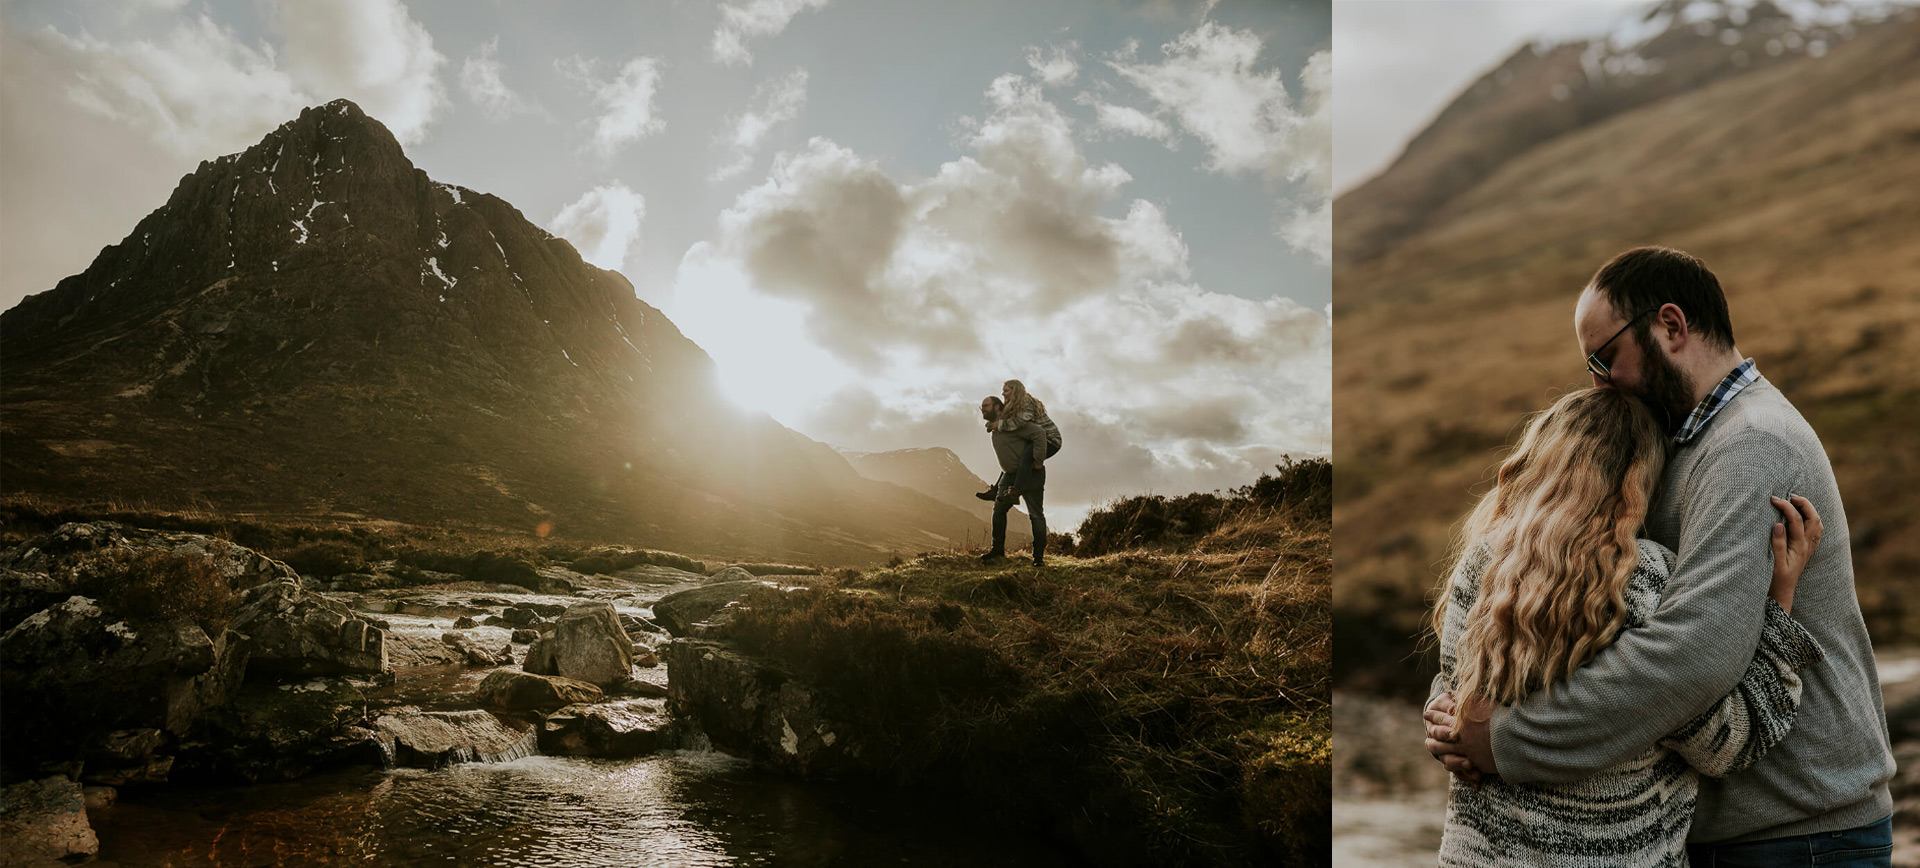 glen coe adventure couple photoshoot - couple in breathtaking scenery of scotland